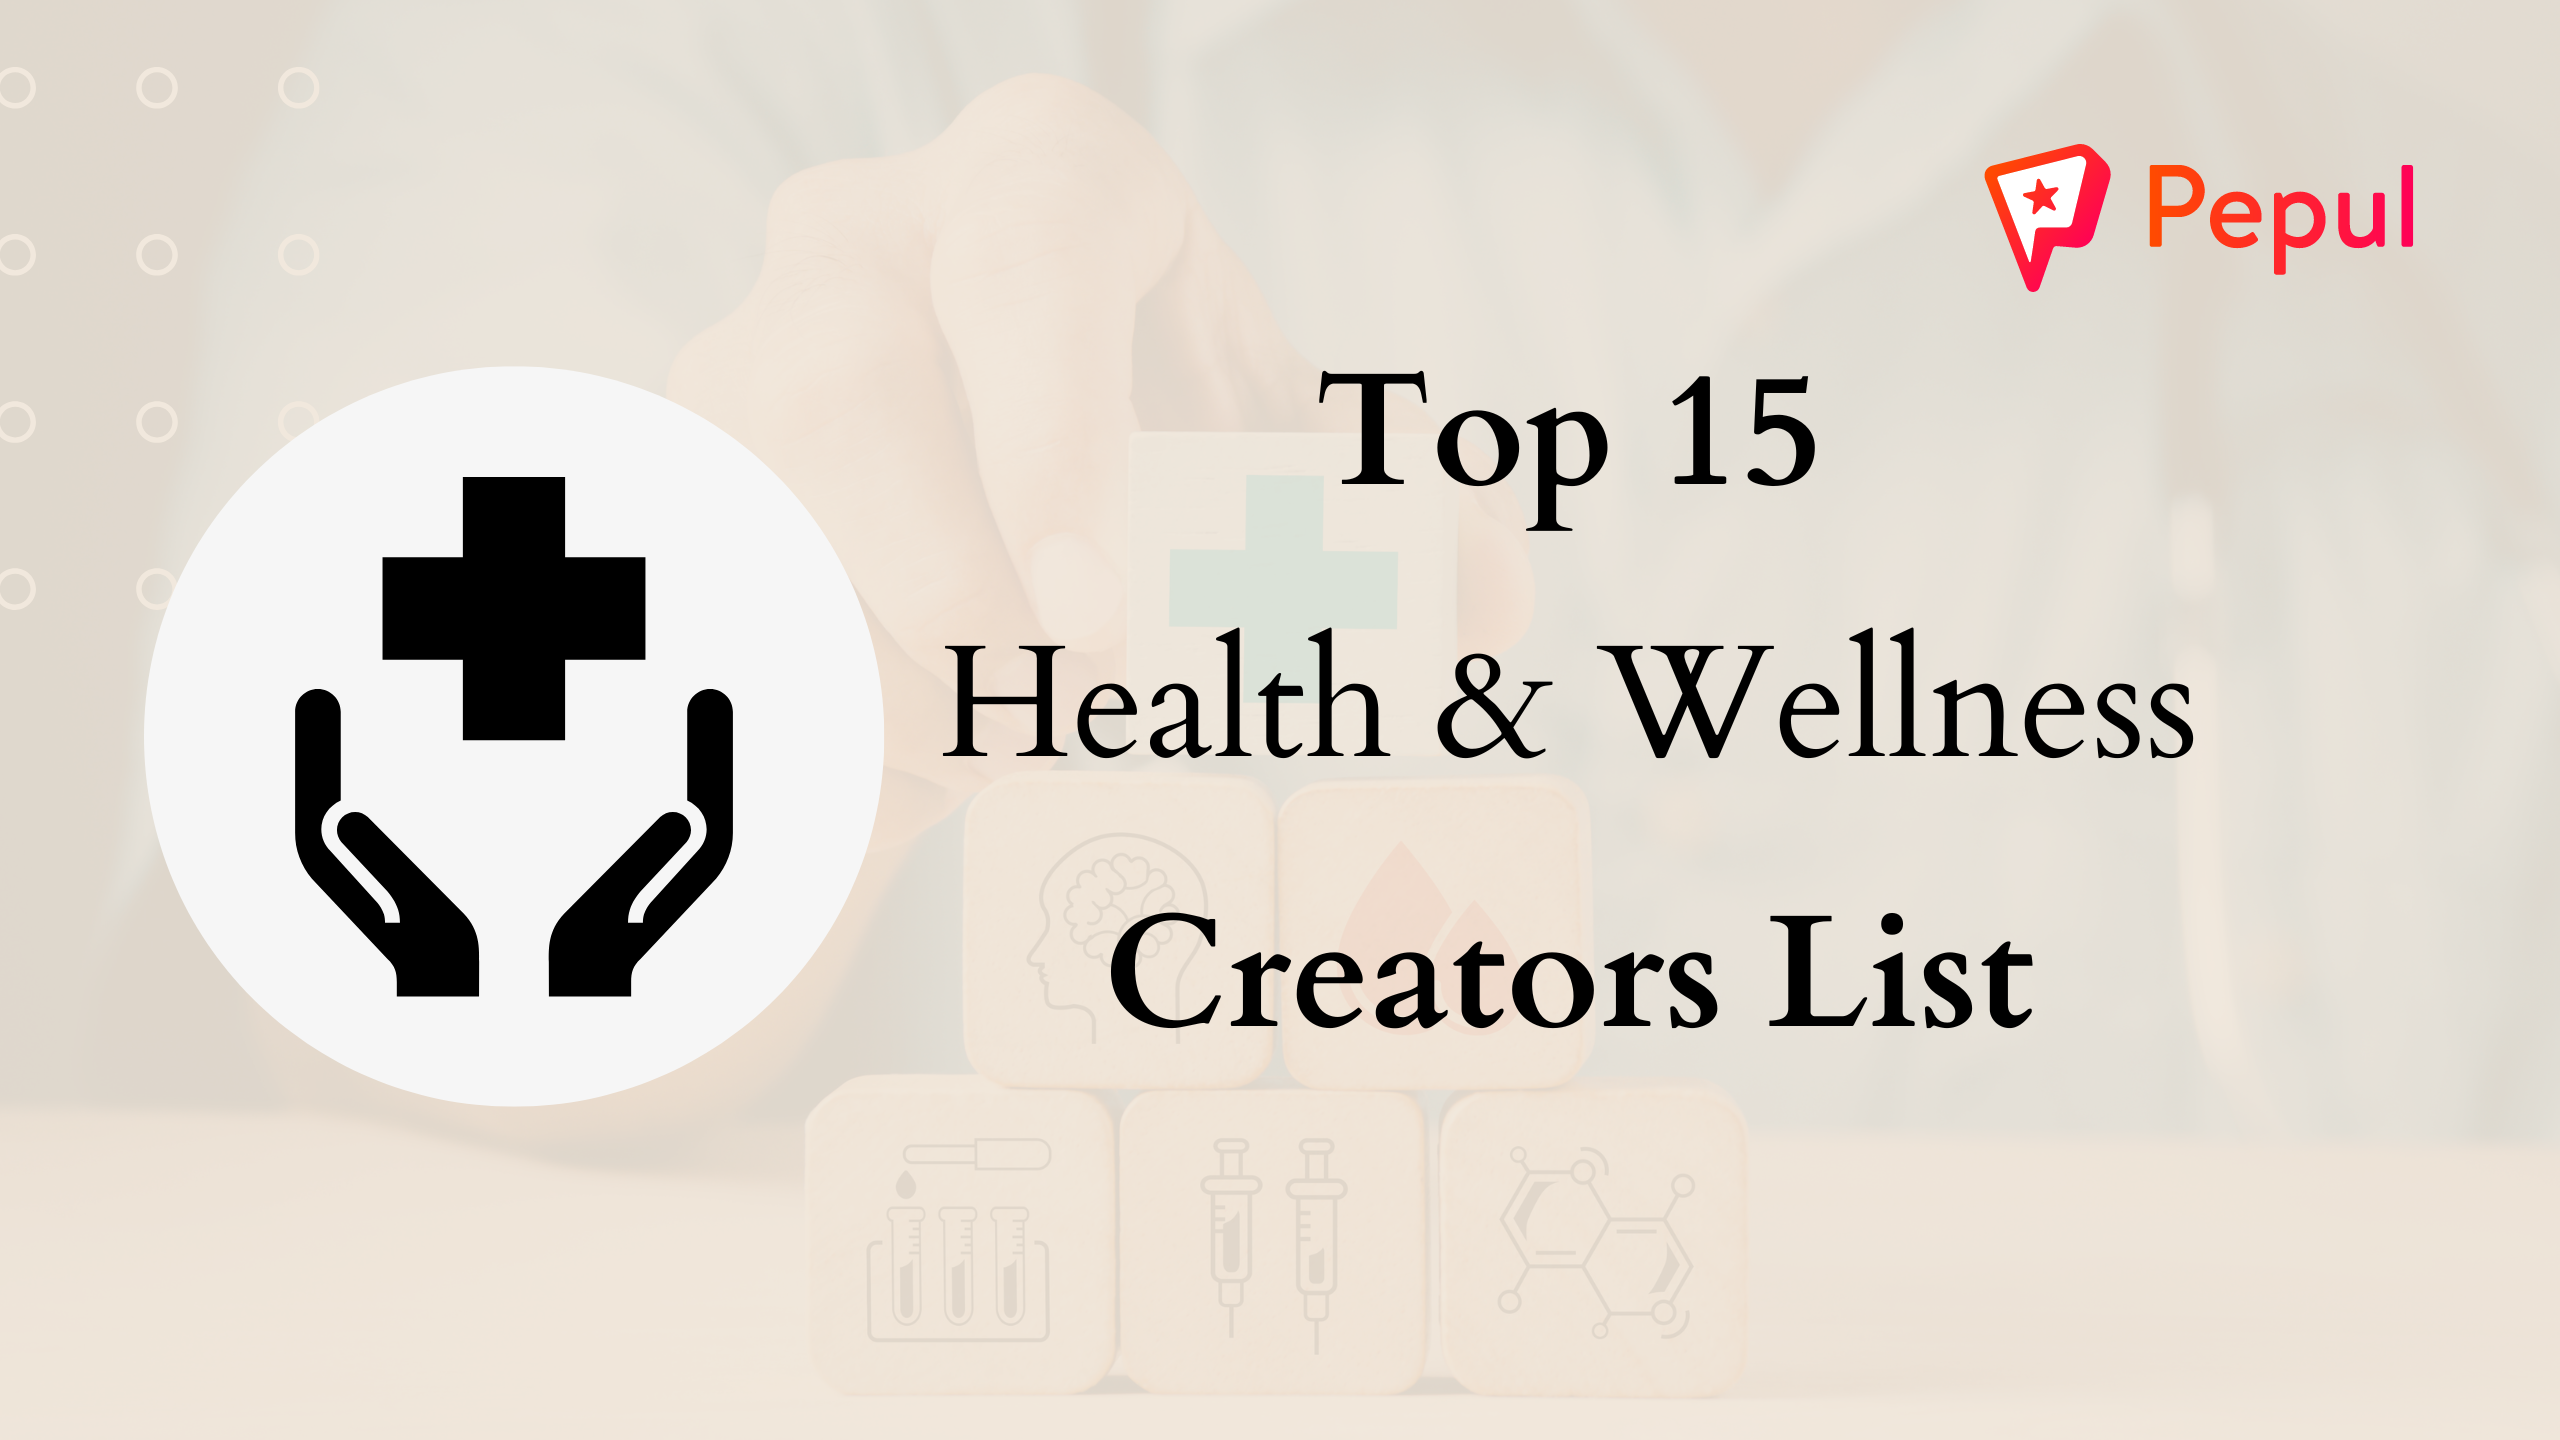 Top 15 Tamil Nadu Health & Wellness Category Pepul Creators List